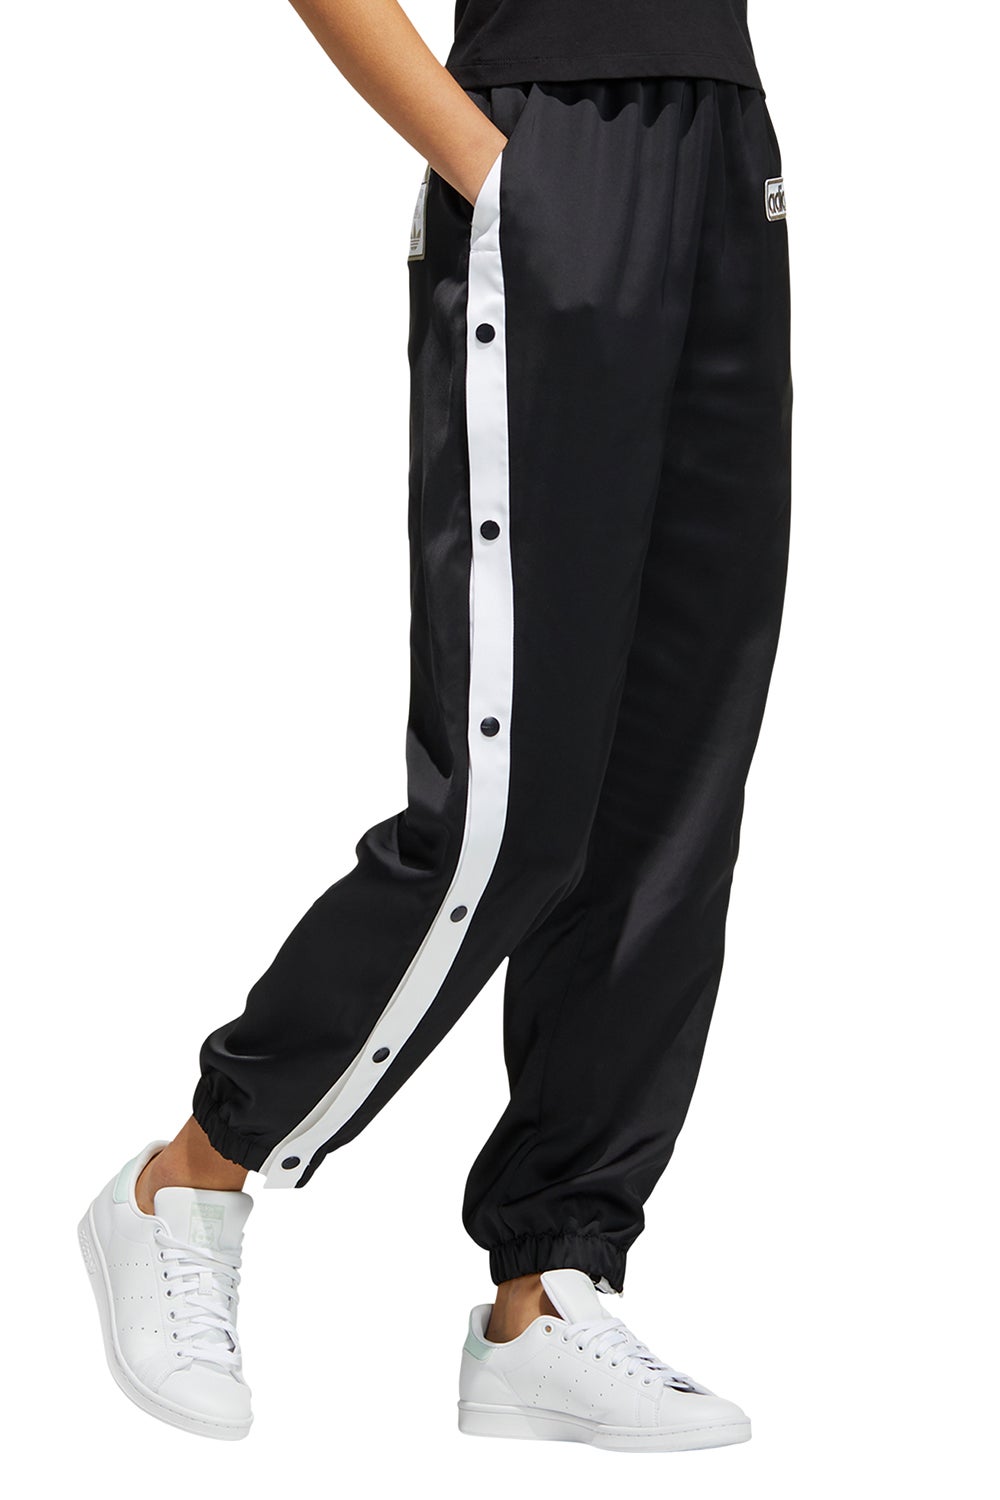 adidas Adibreak Track Pants Black/White